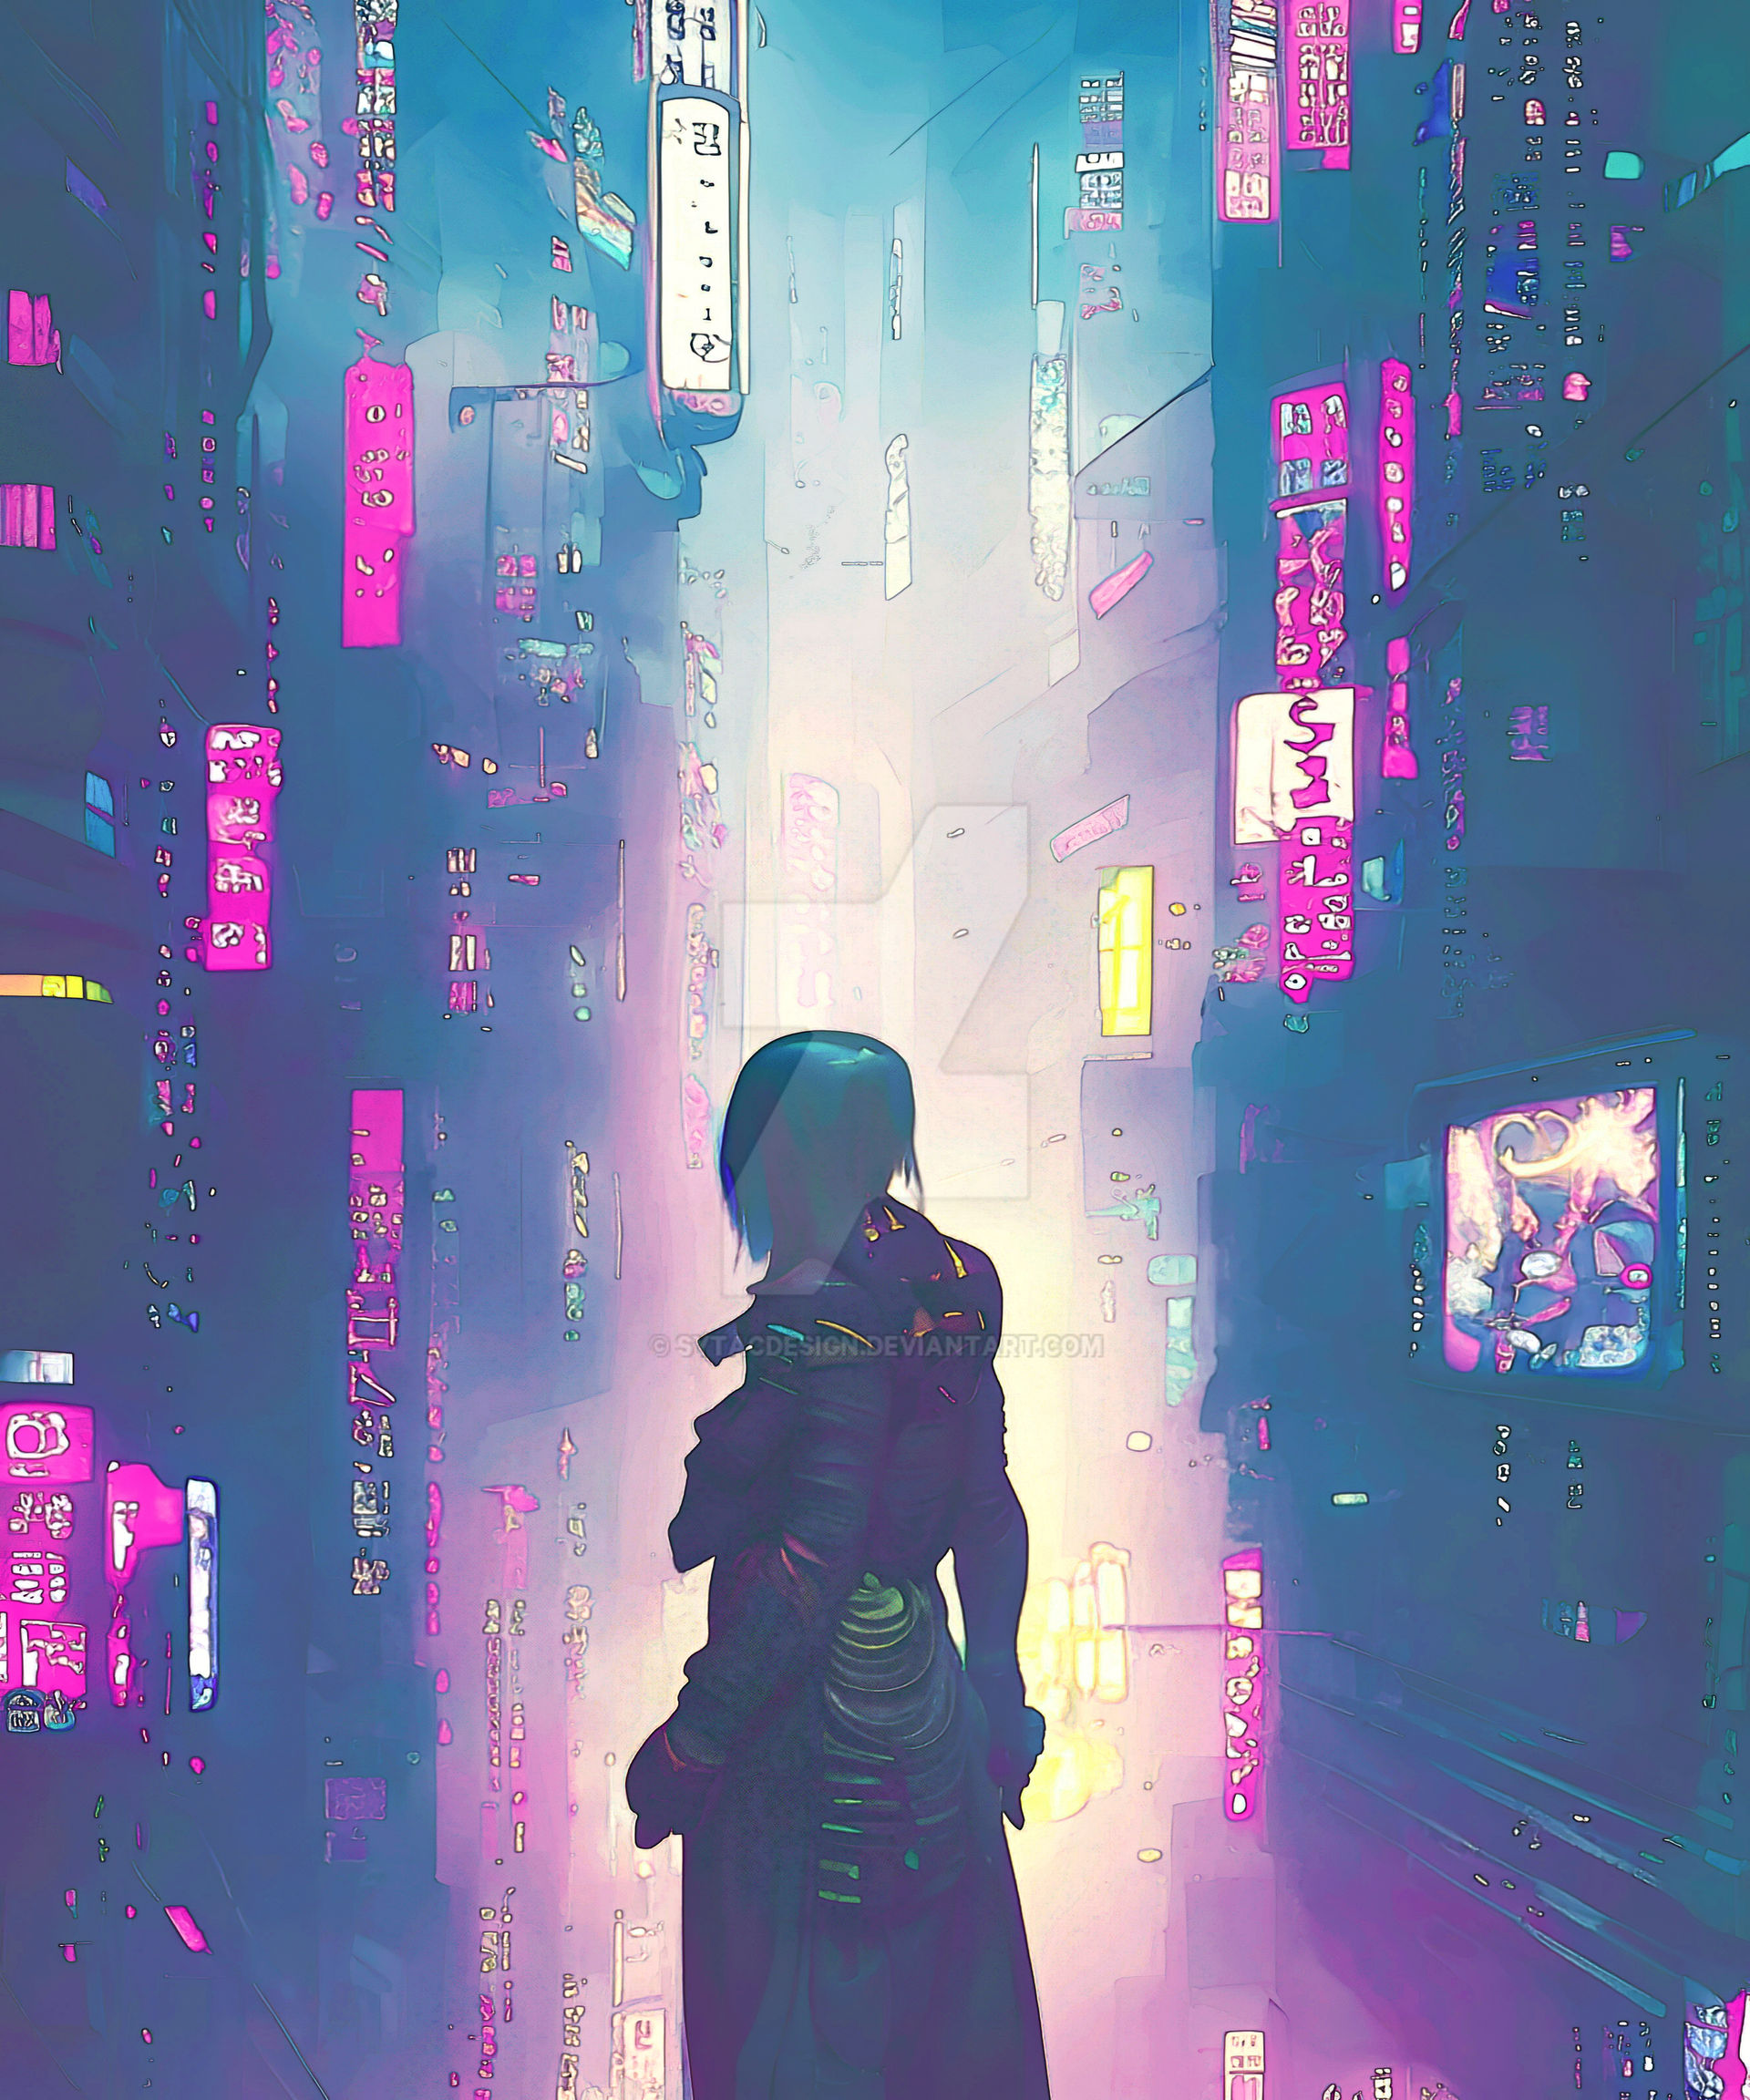 100+] Japan Cyberpunk Wallpapers